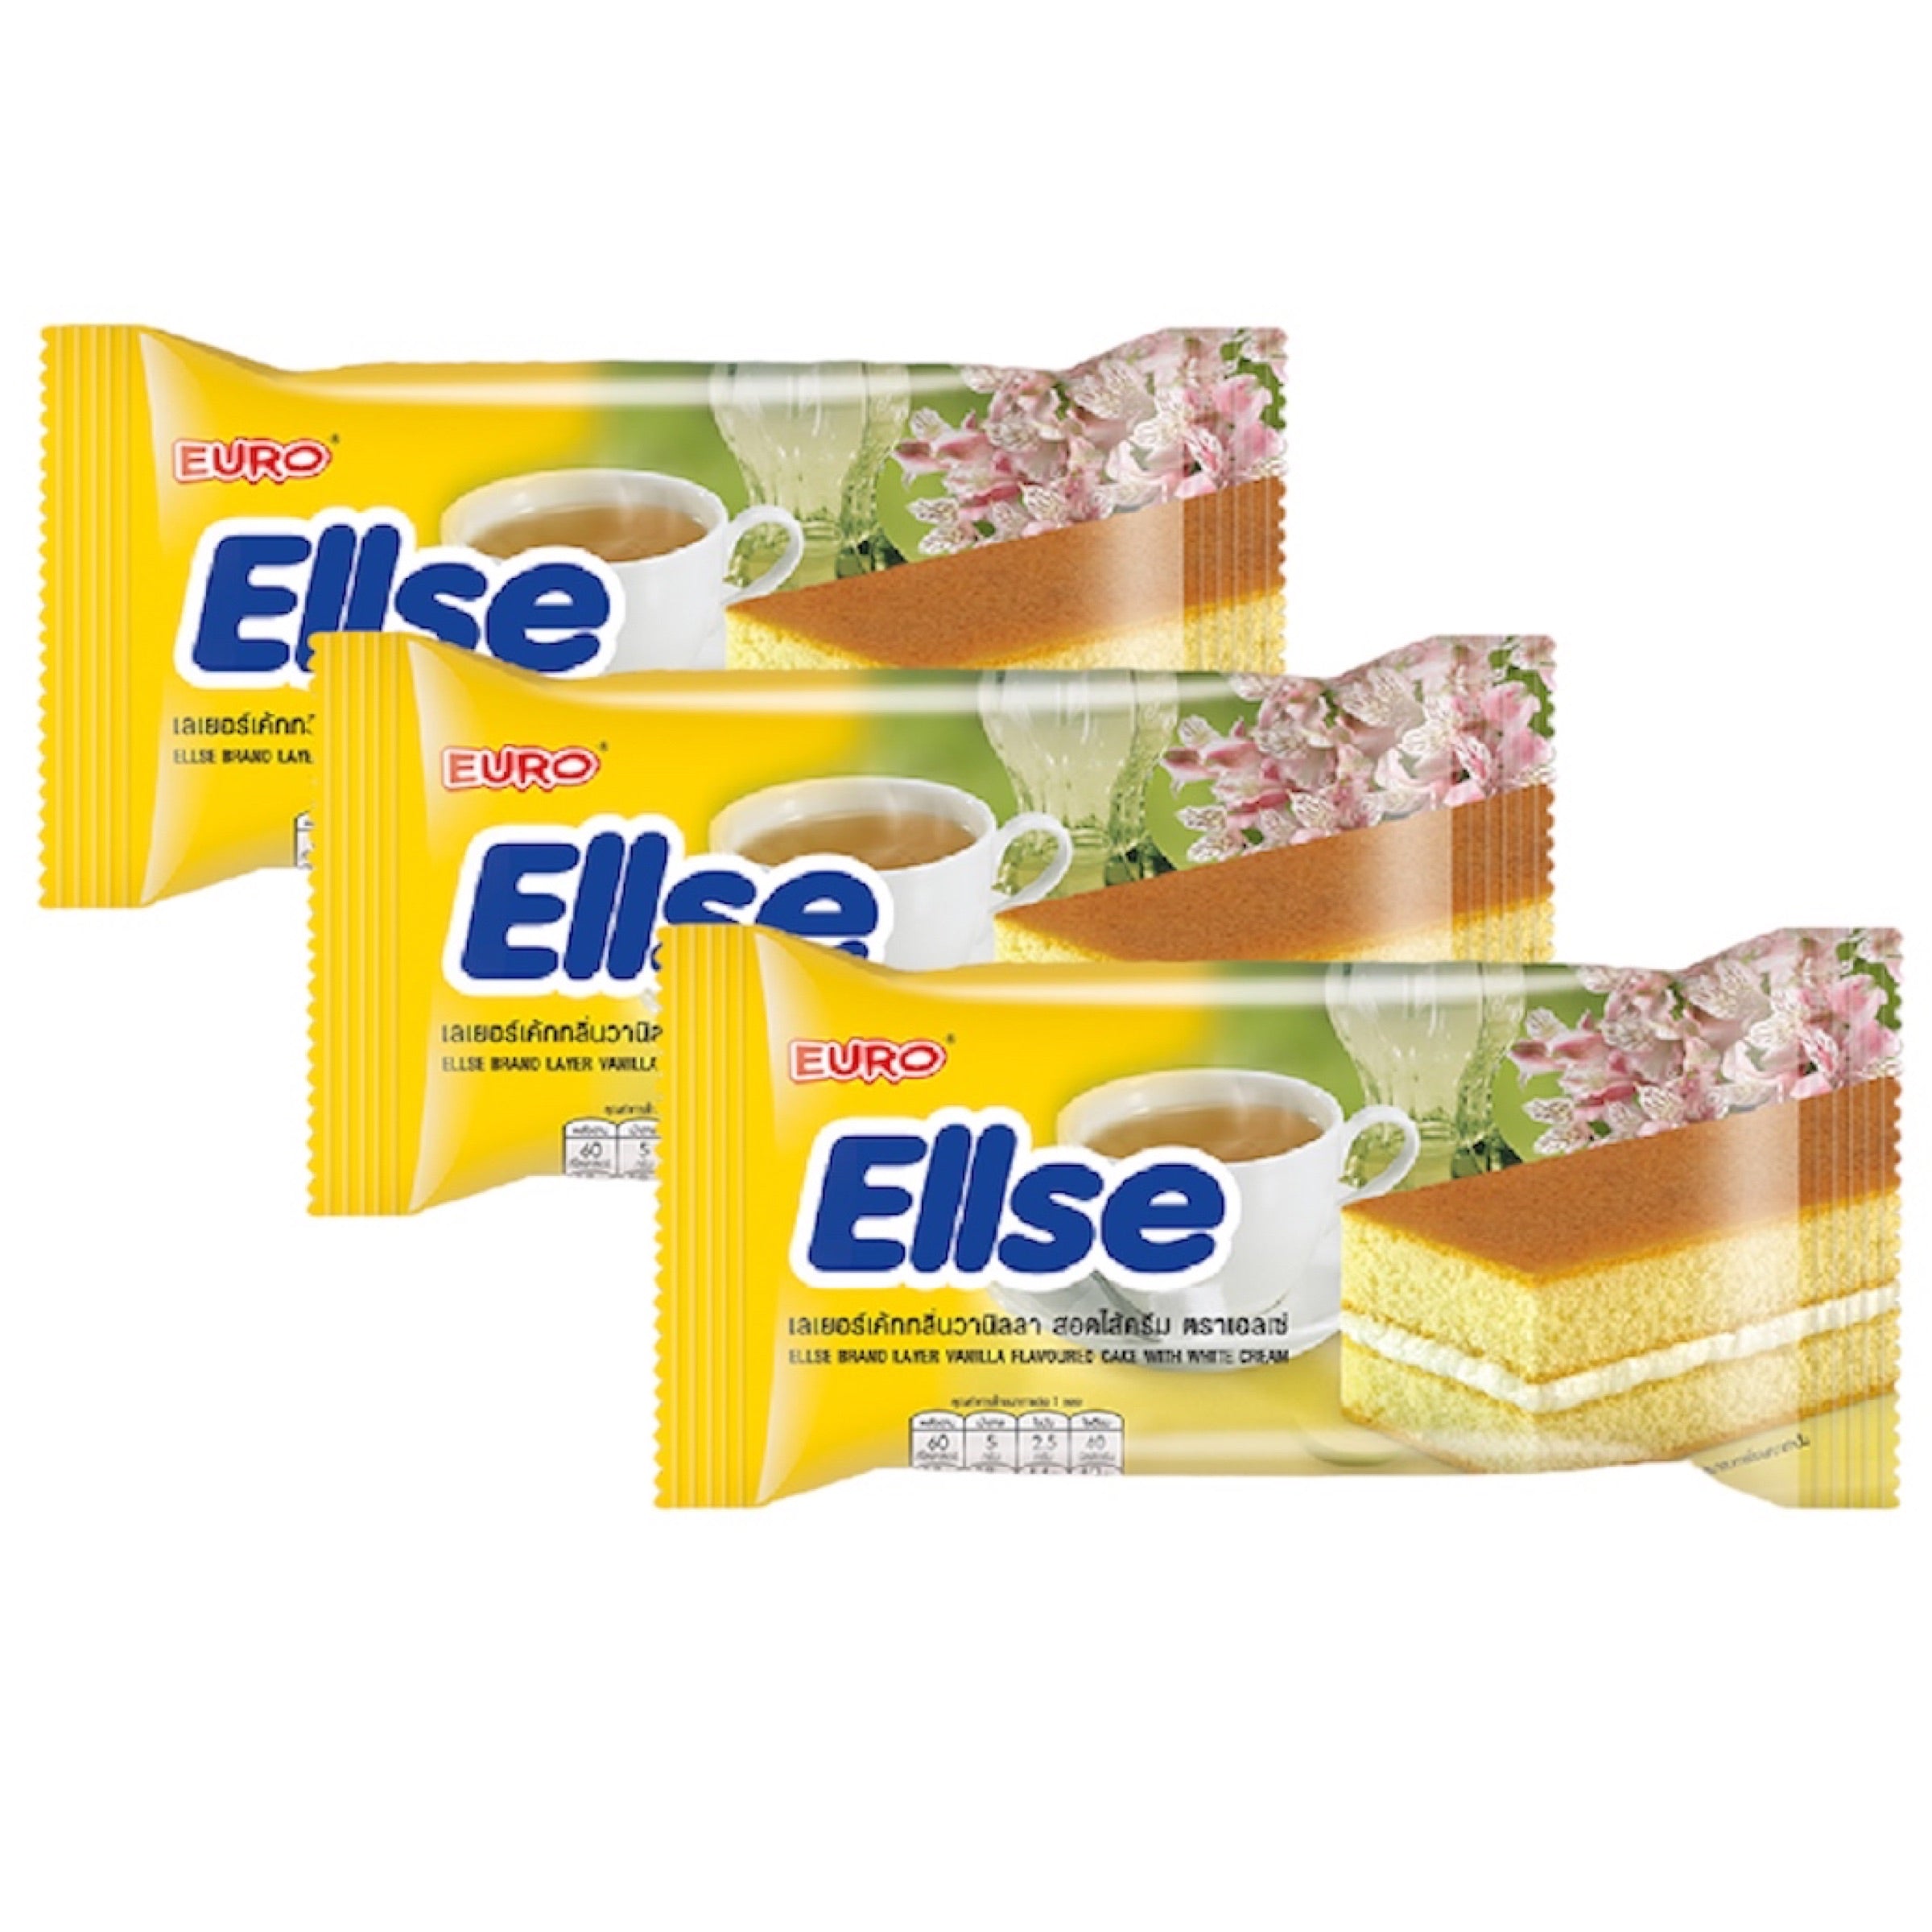 3-Pack Ellse Vanilla Cake